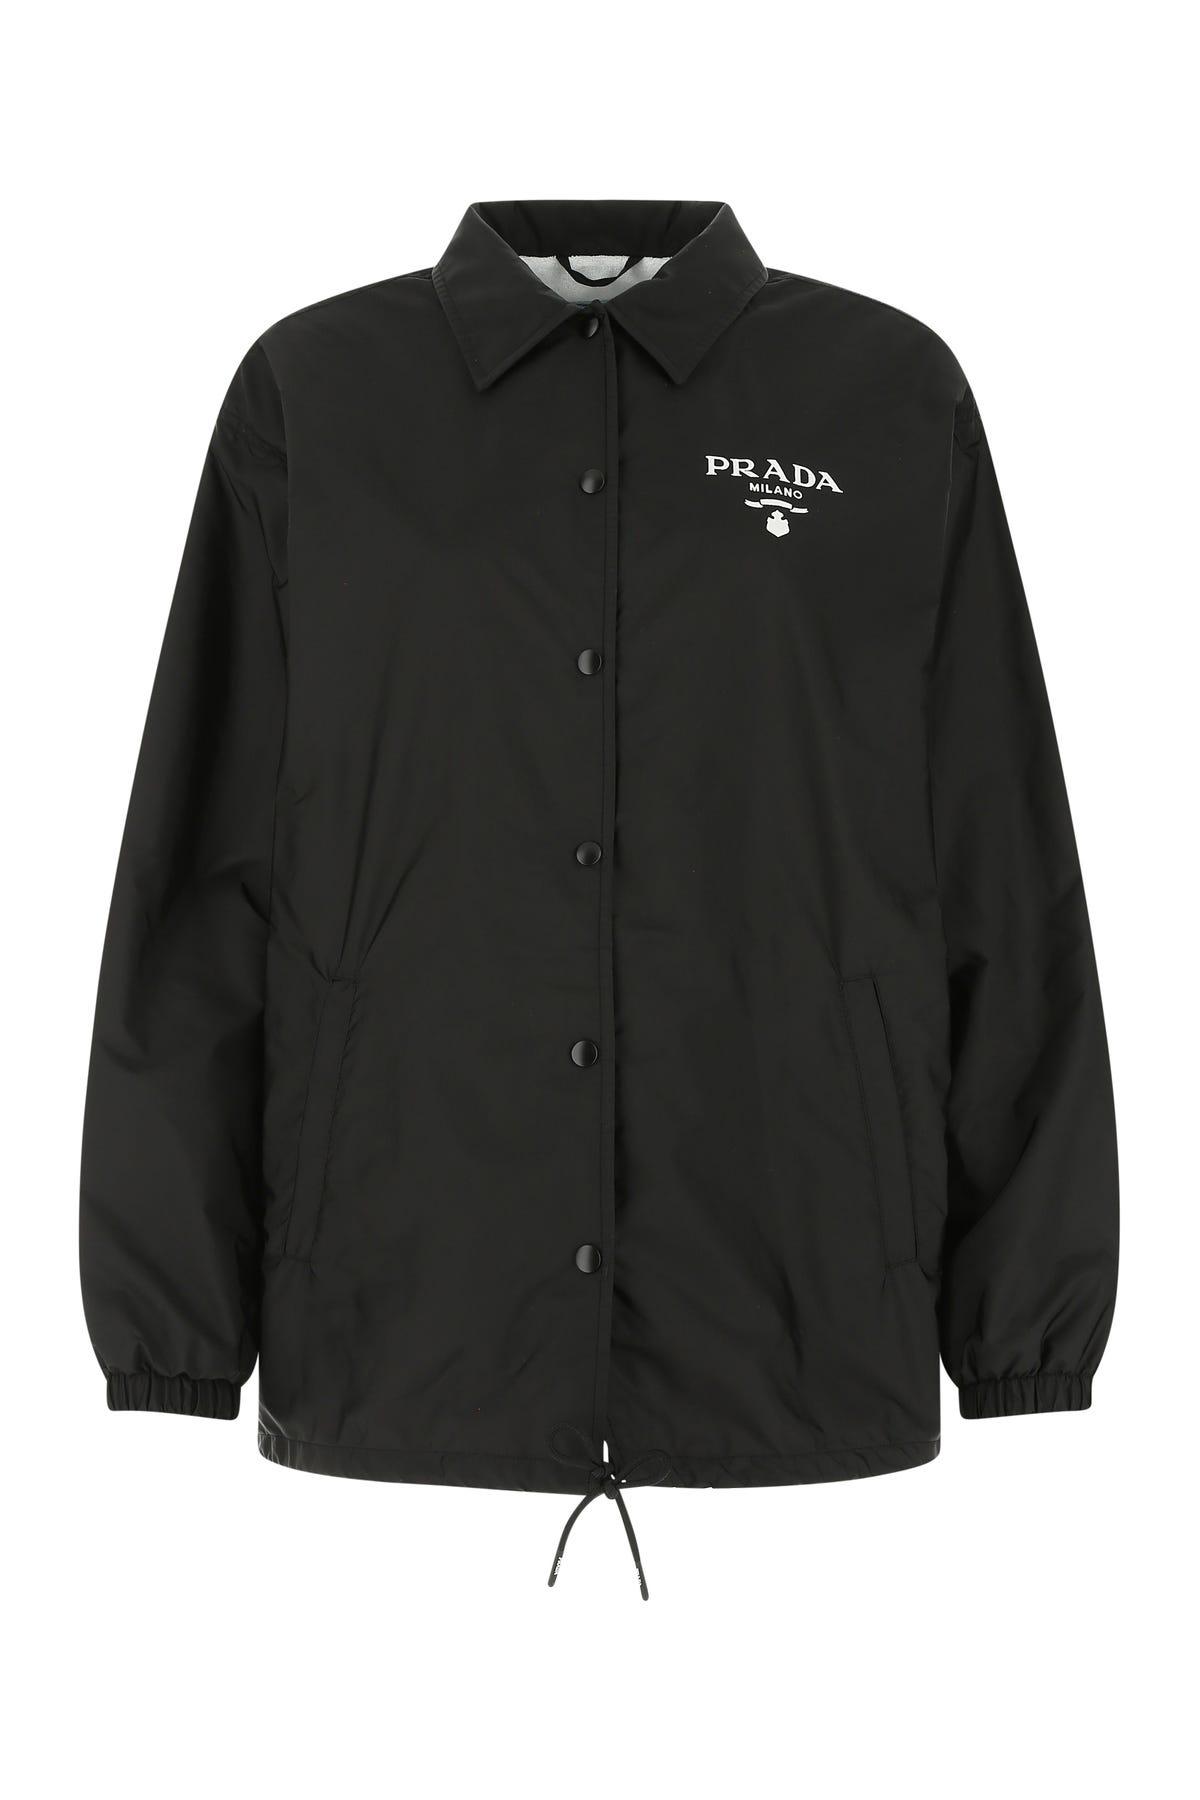 Prada Synthetic Re-nylon Jacket in Black | Lyst